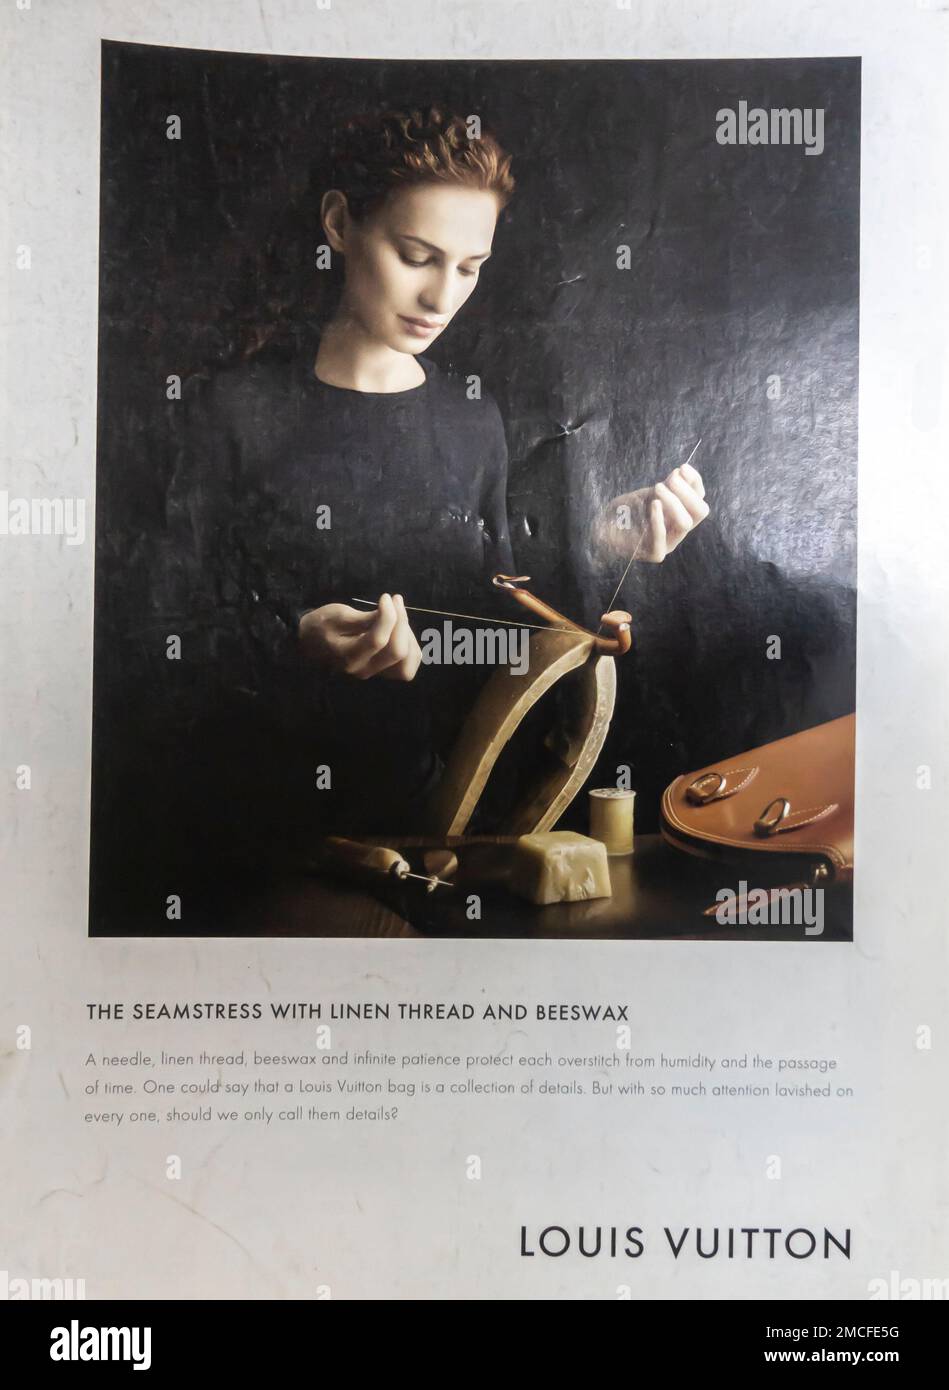 The Advertising Archives, Magazine Advert, Louis Vuitton